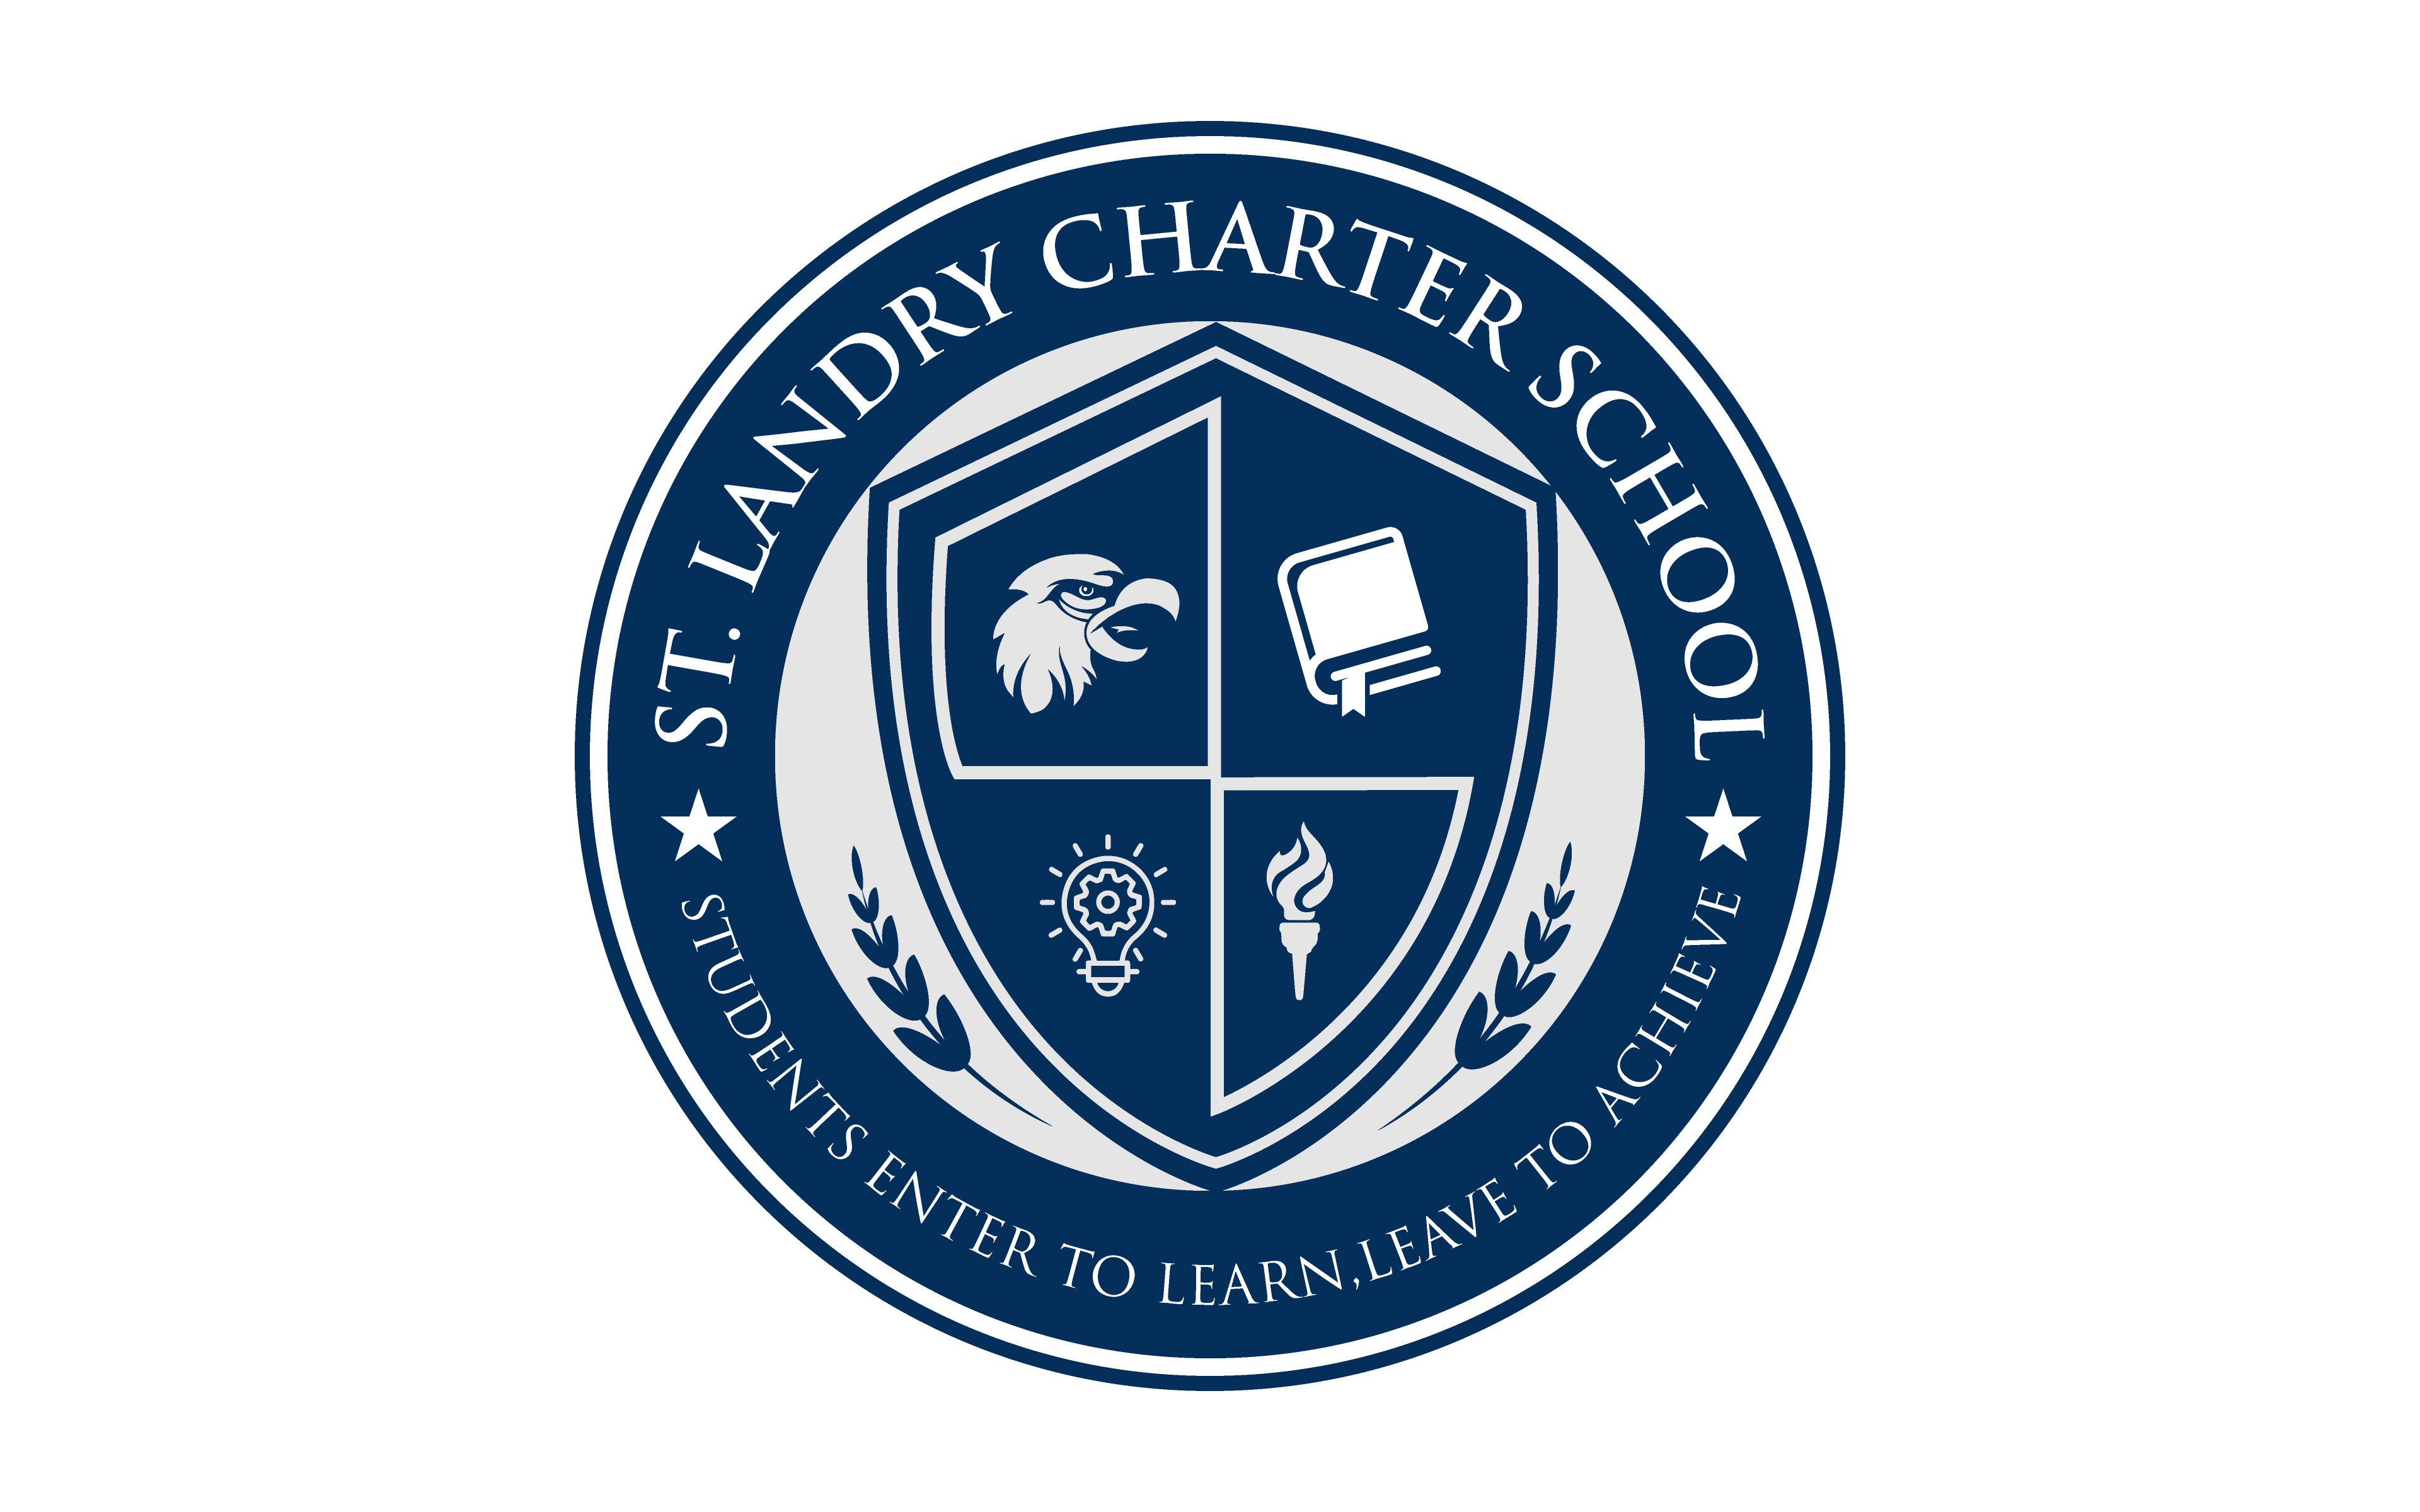 St Landry Charter School